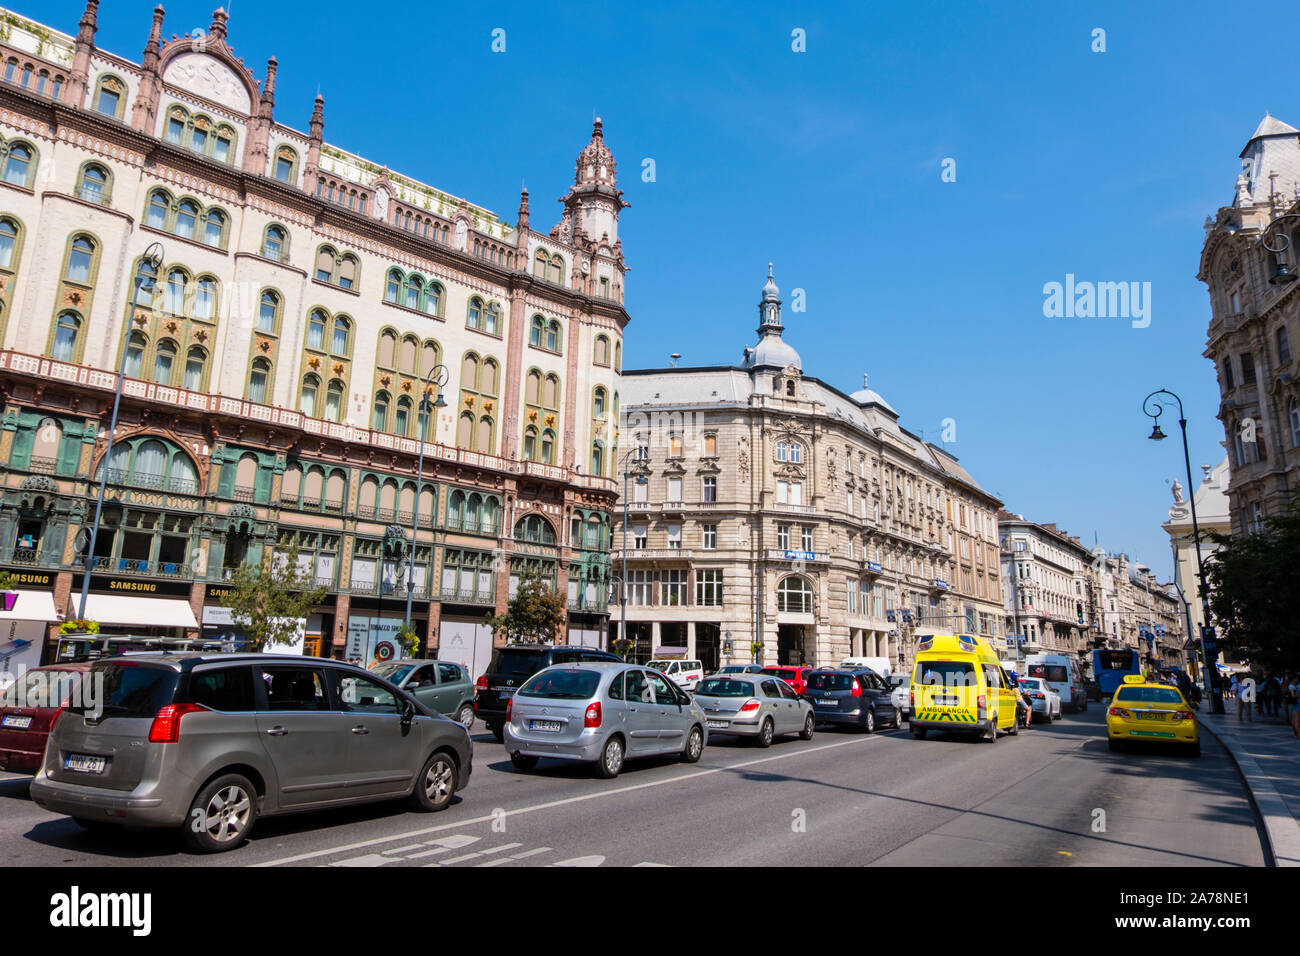 Kossut Lajos utca, at Ferenciek tere, Budapest, Hungary Stock Photo - Alamy